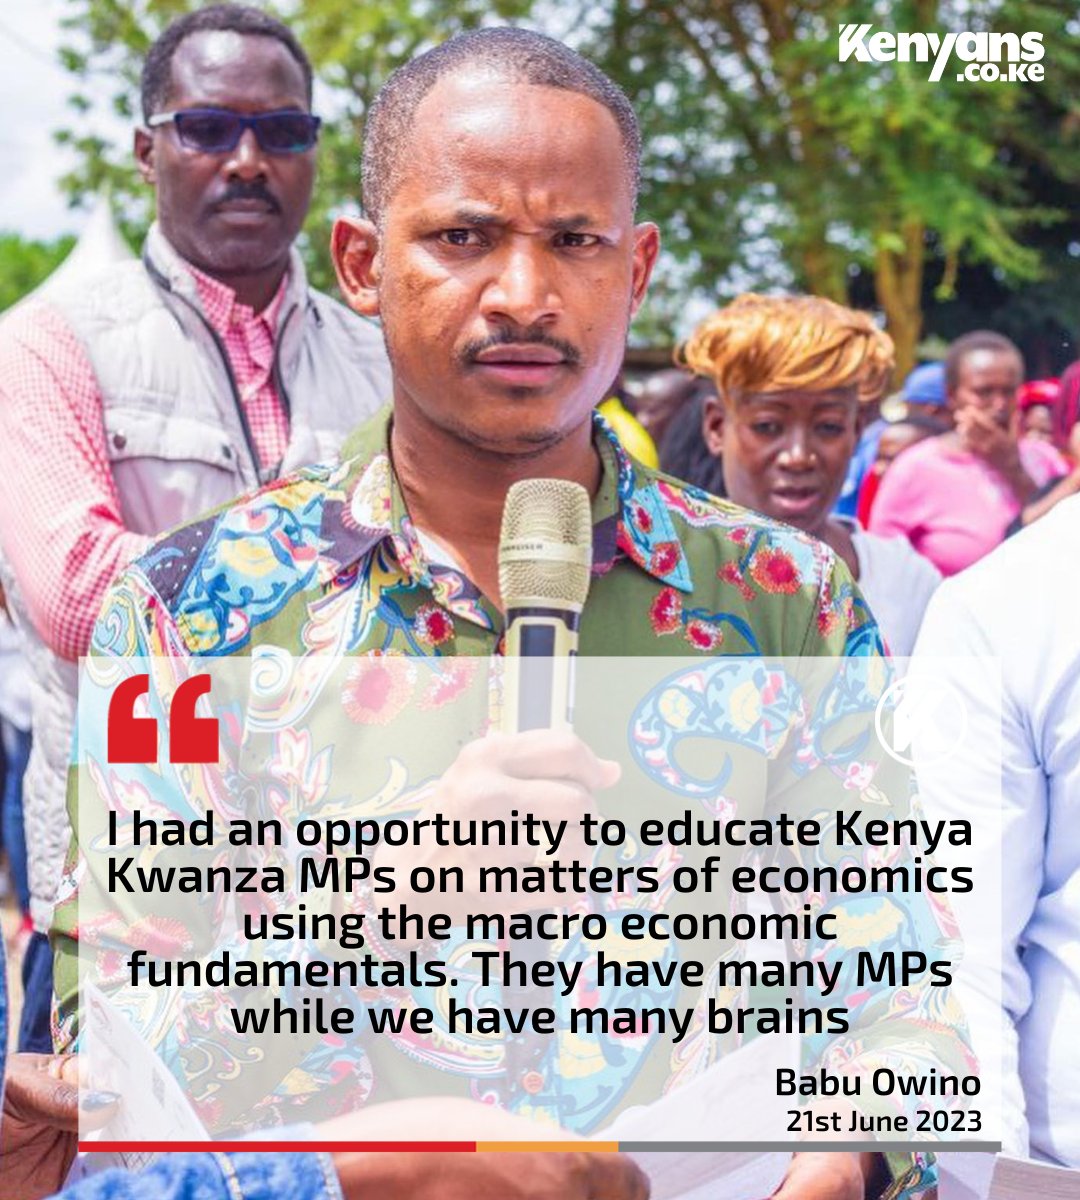 Kenya Kwanza have many MPs while we have many brains - Babu Owino